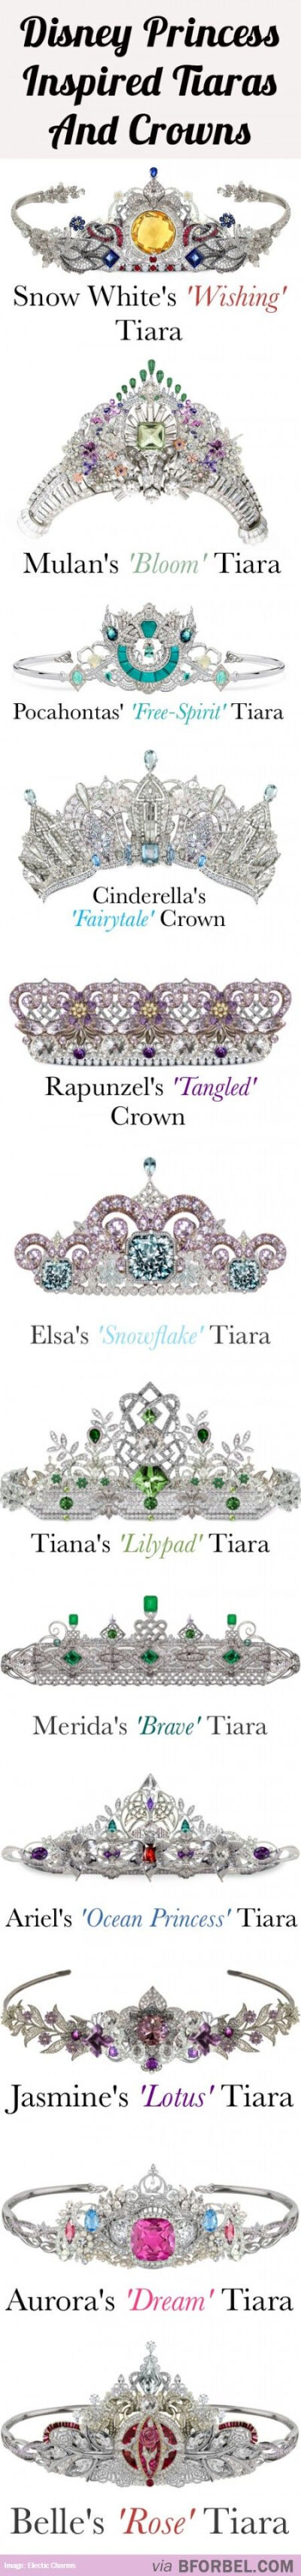 Disney Princess Inspired Tiaras by.沈弘